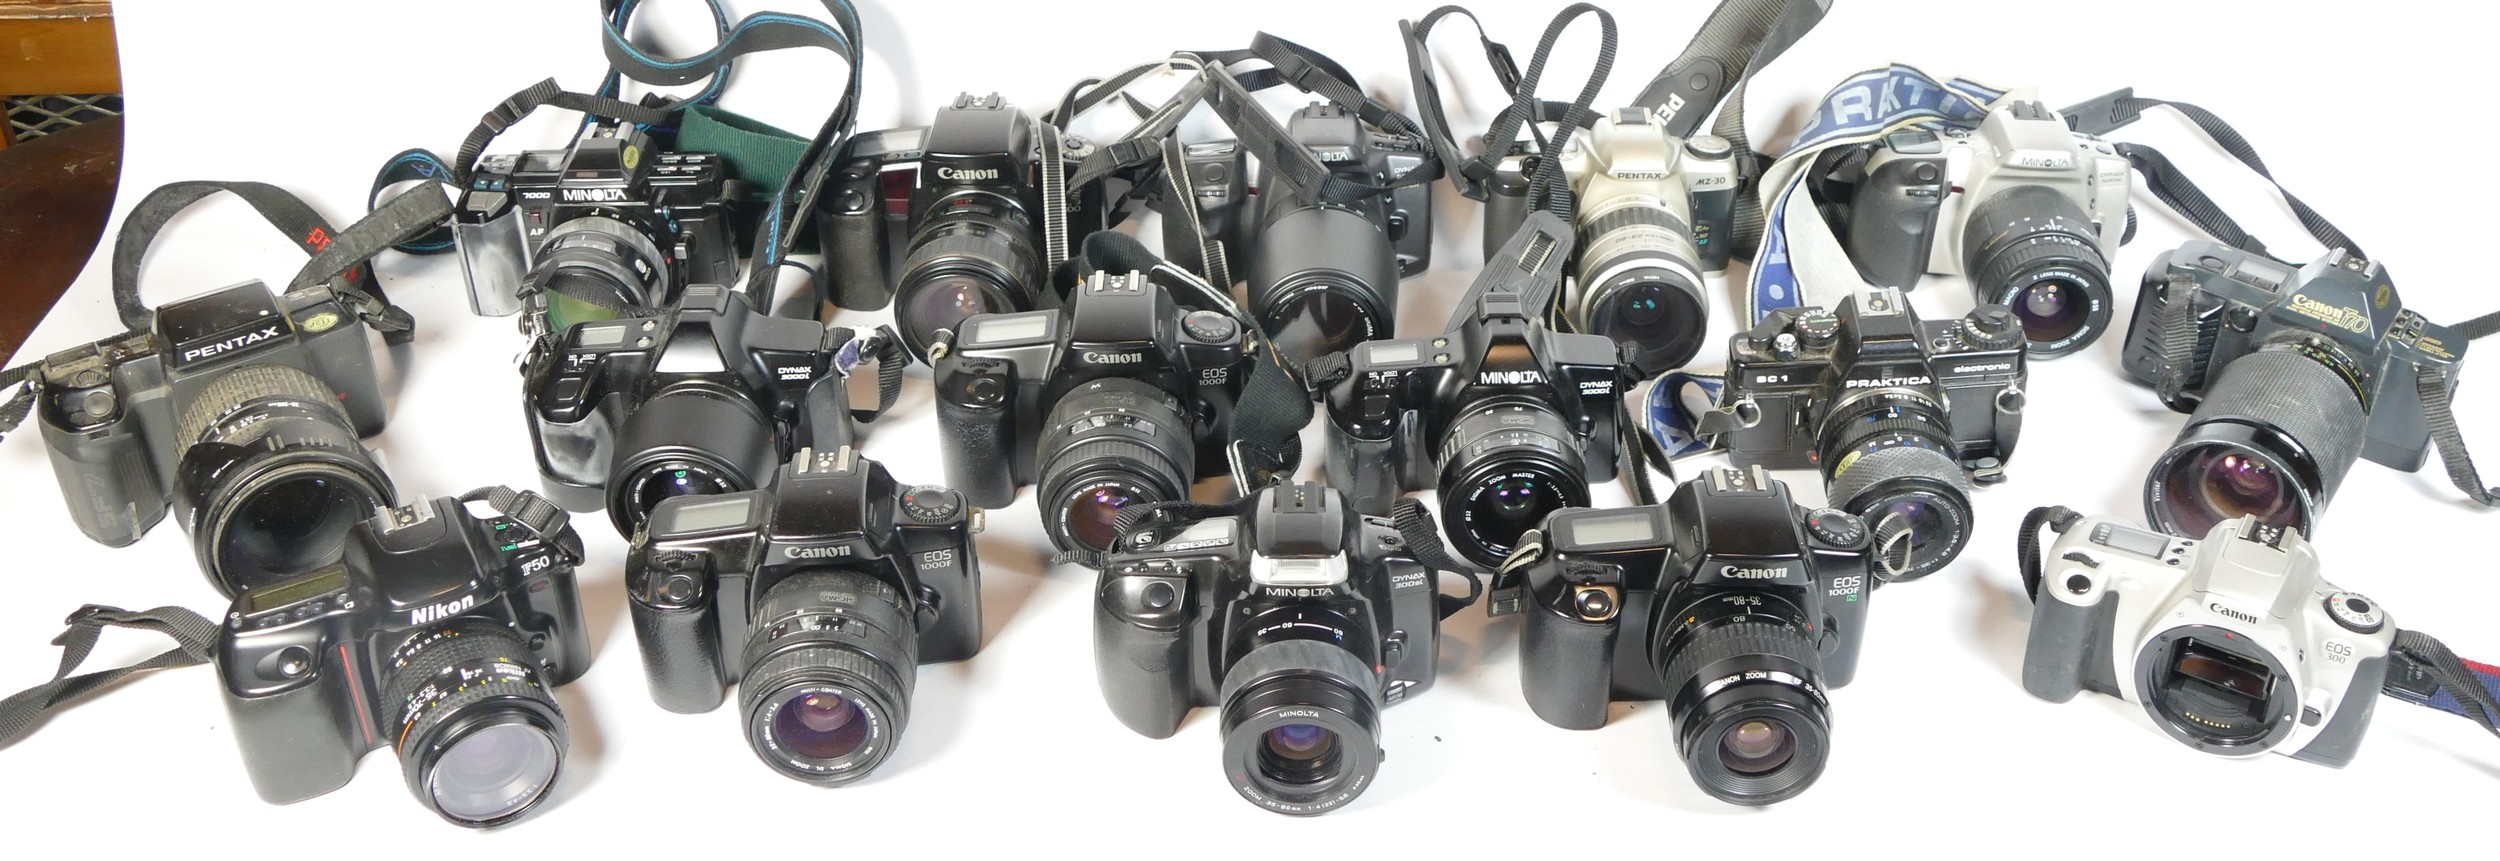 Twenty three SLR vintage film cameras to include a Minolta 500si, a Nikon F50, a Praktica BC1, a